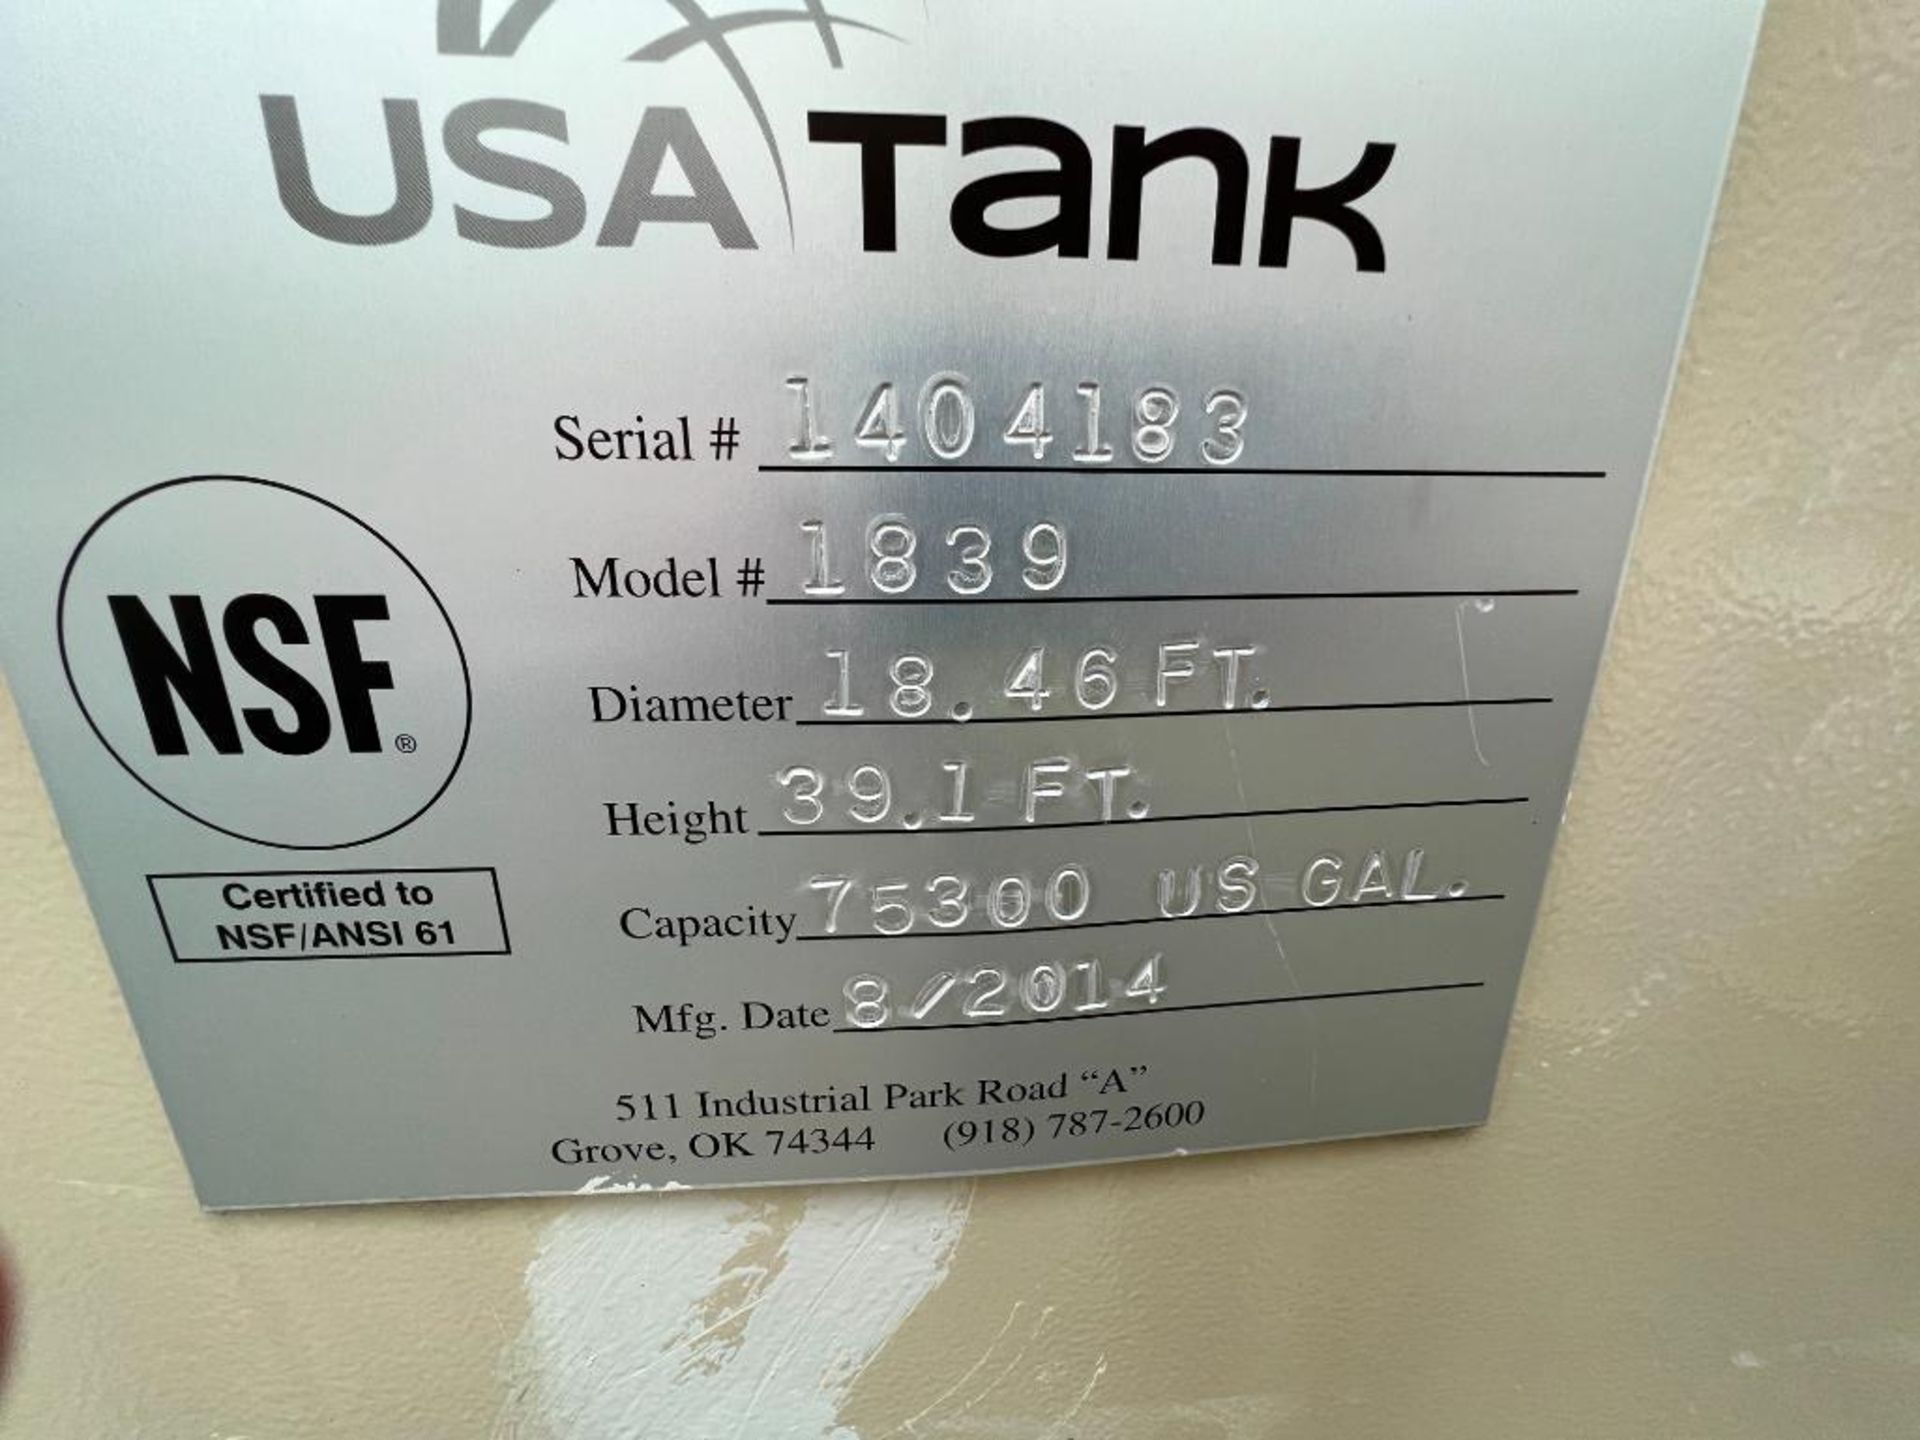 (2) 2014 USA Tank steel riveted liquid storage tanks for PH balance, 75,300 gallon capacity - Image 11 of 16